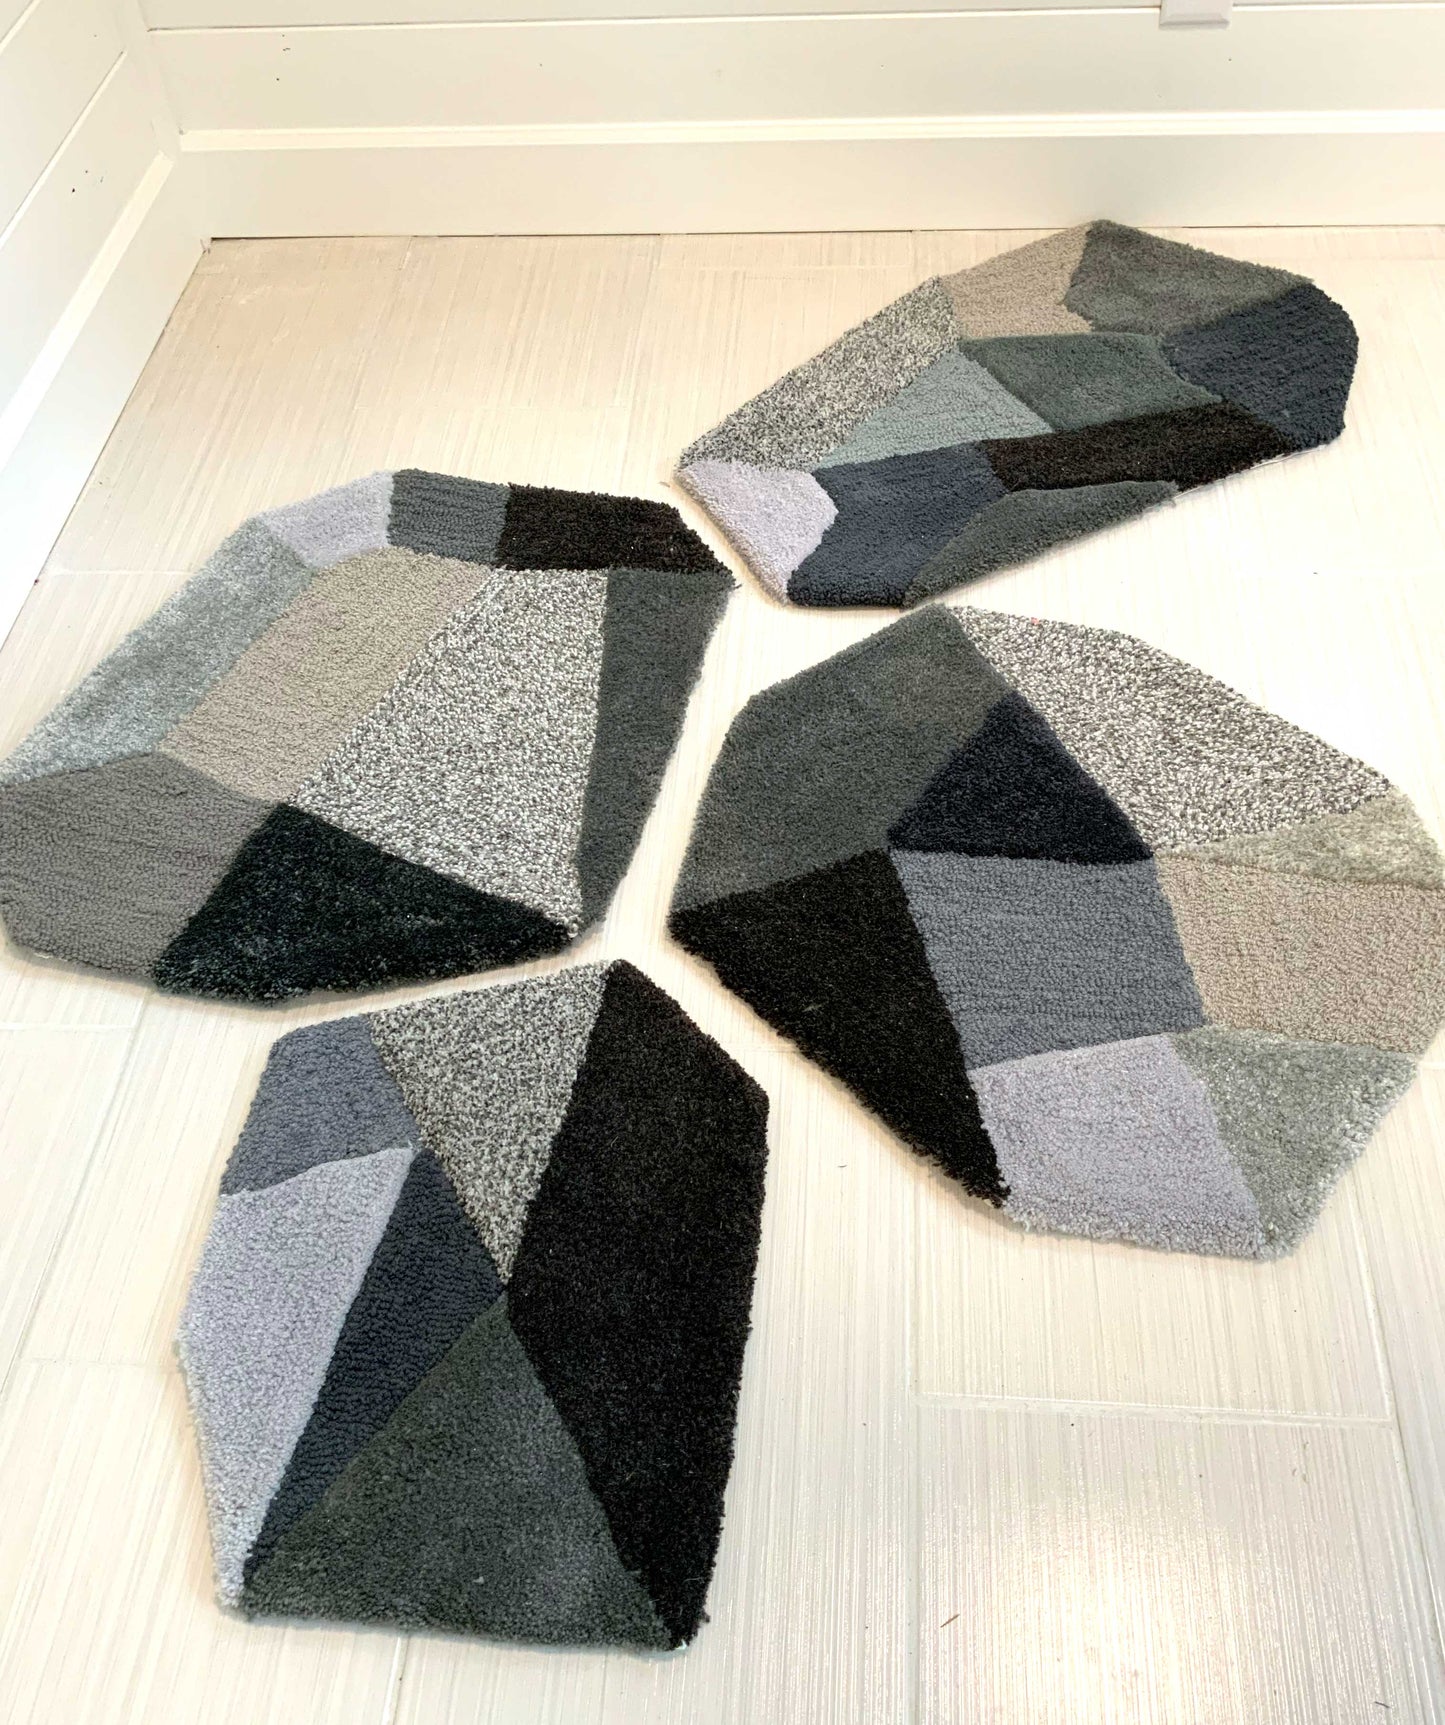 Hand tufted geometric rock small rug, 70% wool and 30% acrylic